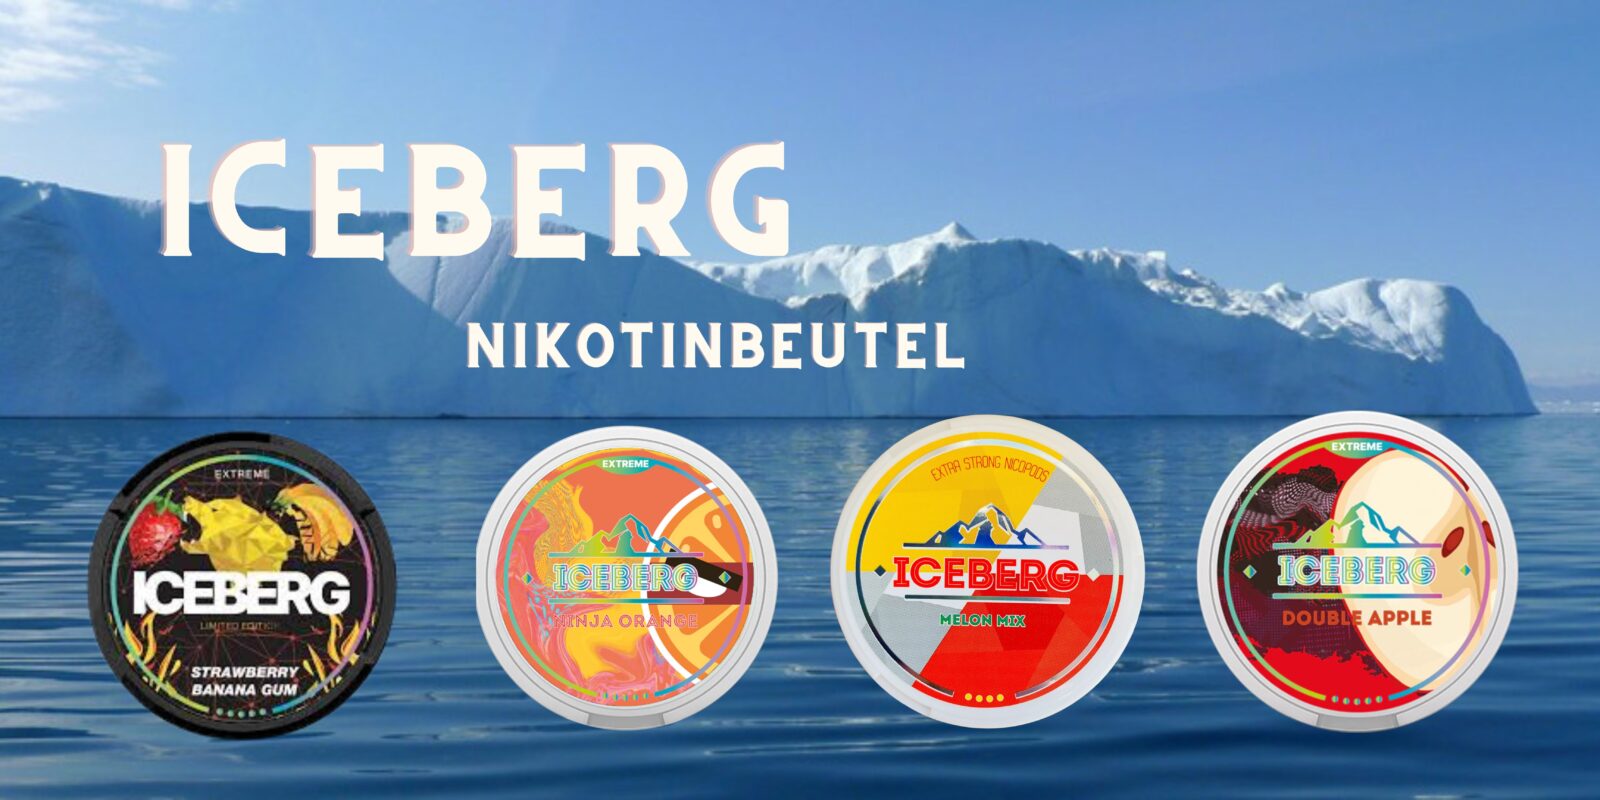 Iceberg Grapefruit Pineapple SNUS/NIKOTINBEUTEL - XMANIA Deutschland 14